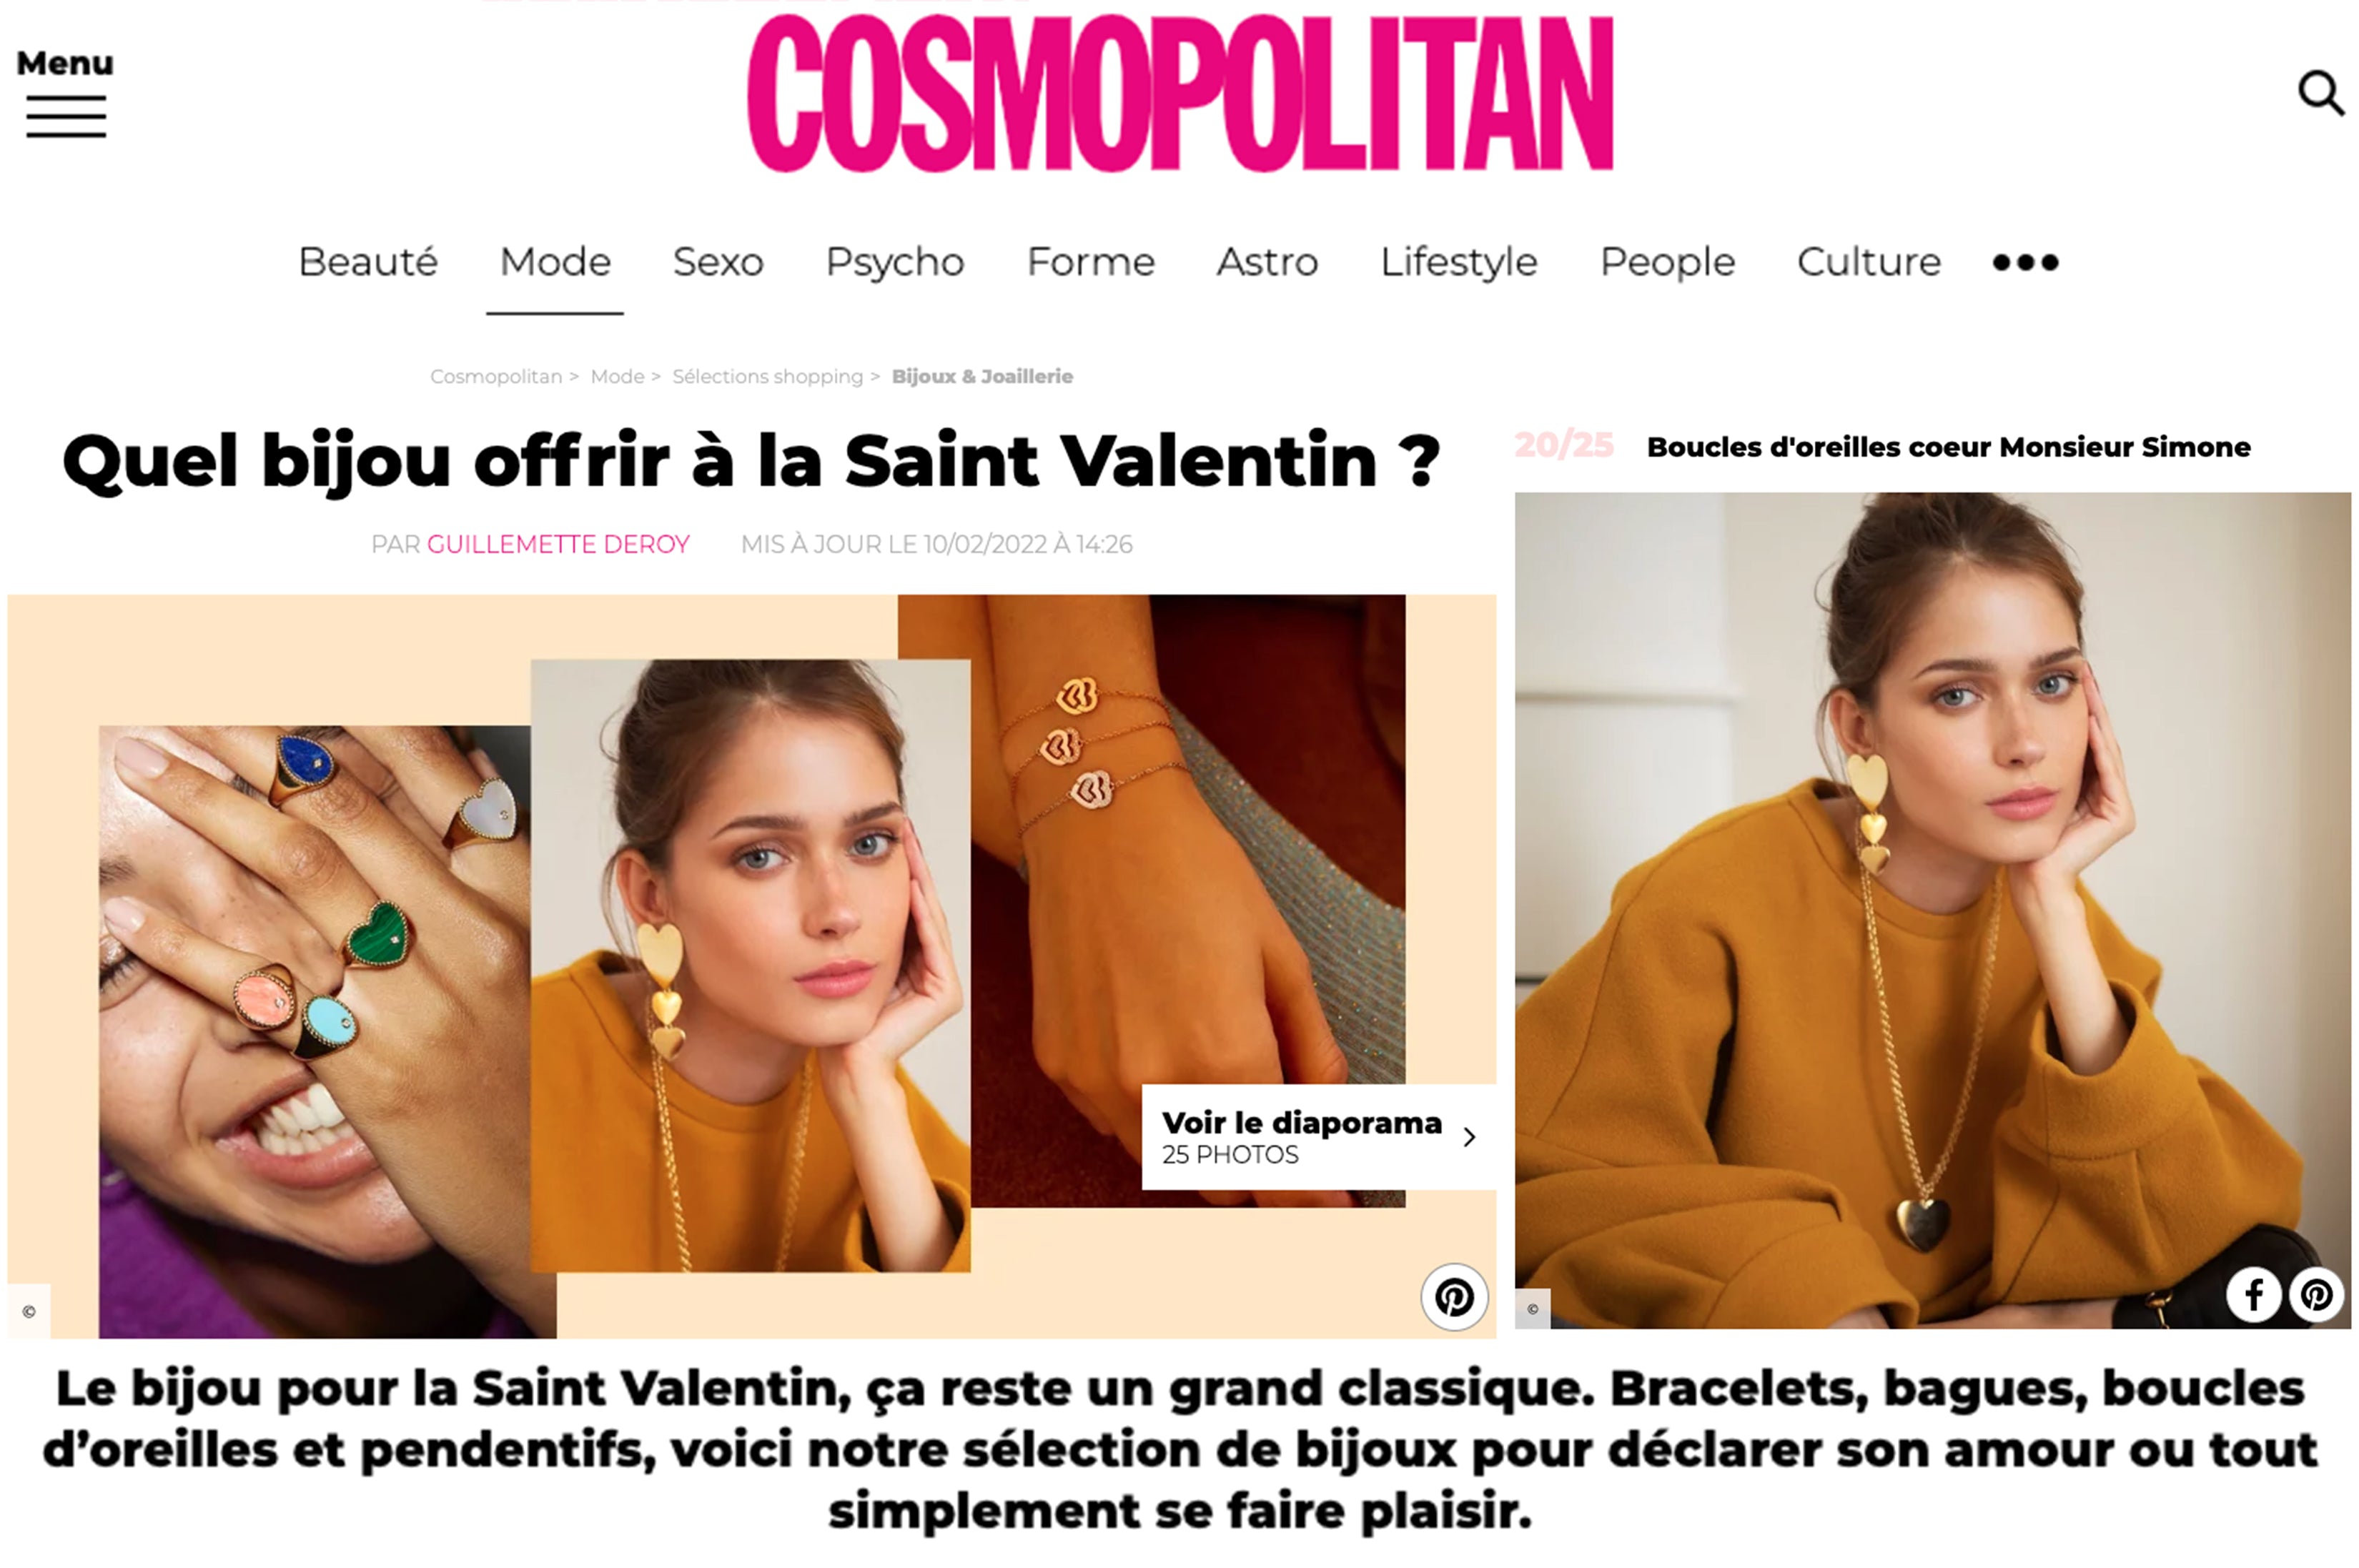 Bijoux Monsieur Simone - Cosmopolitan.fr - Février 2022